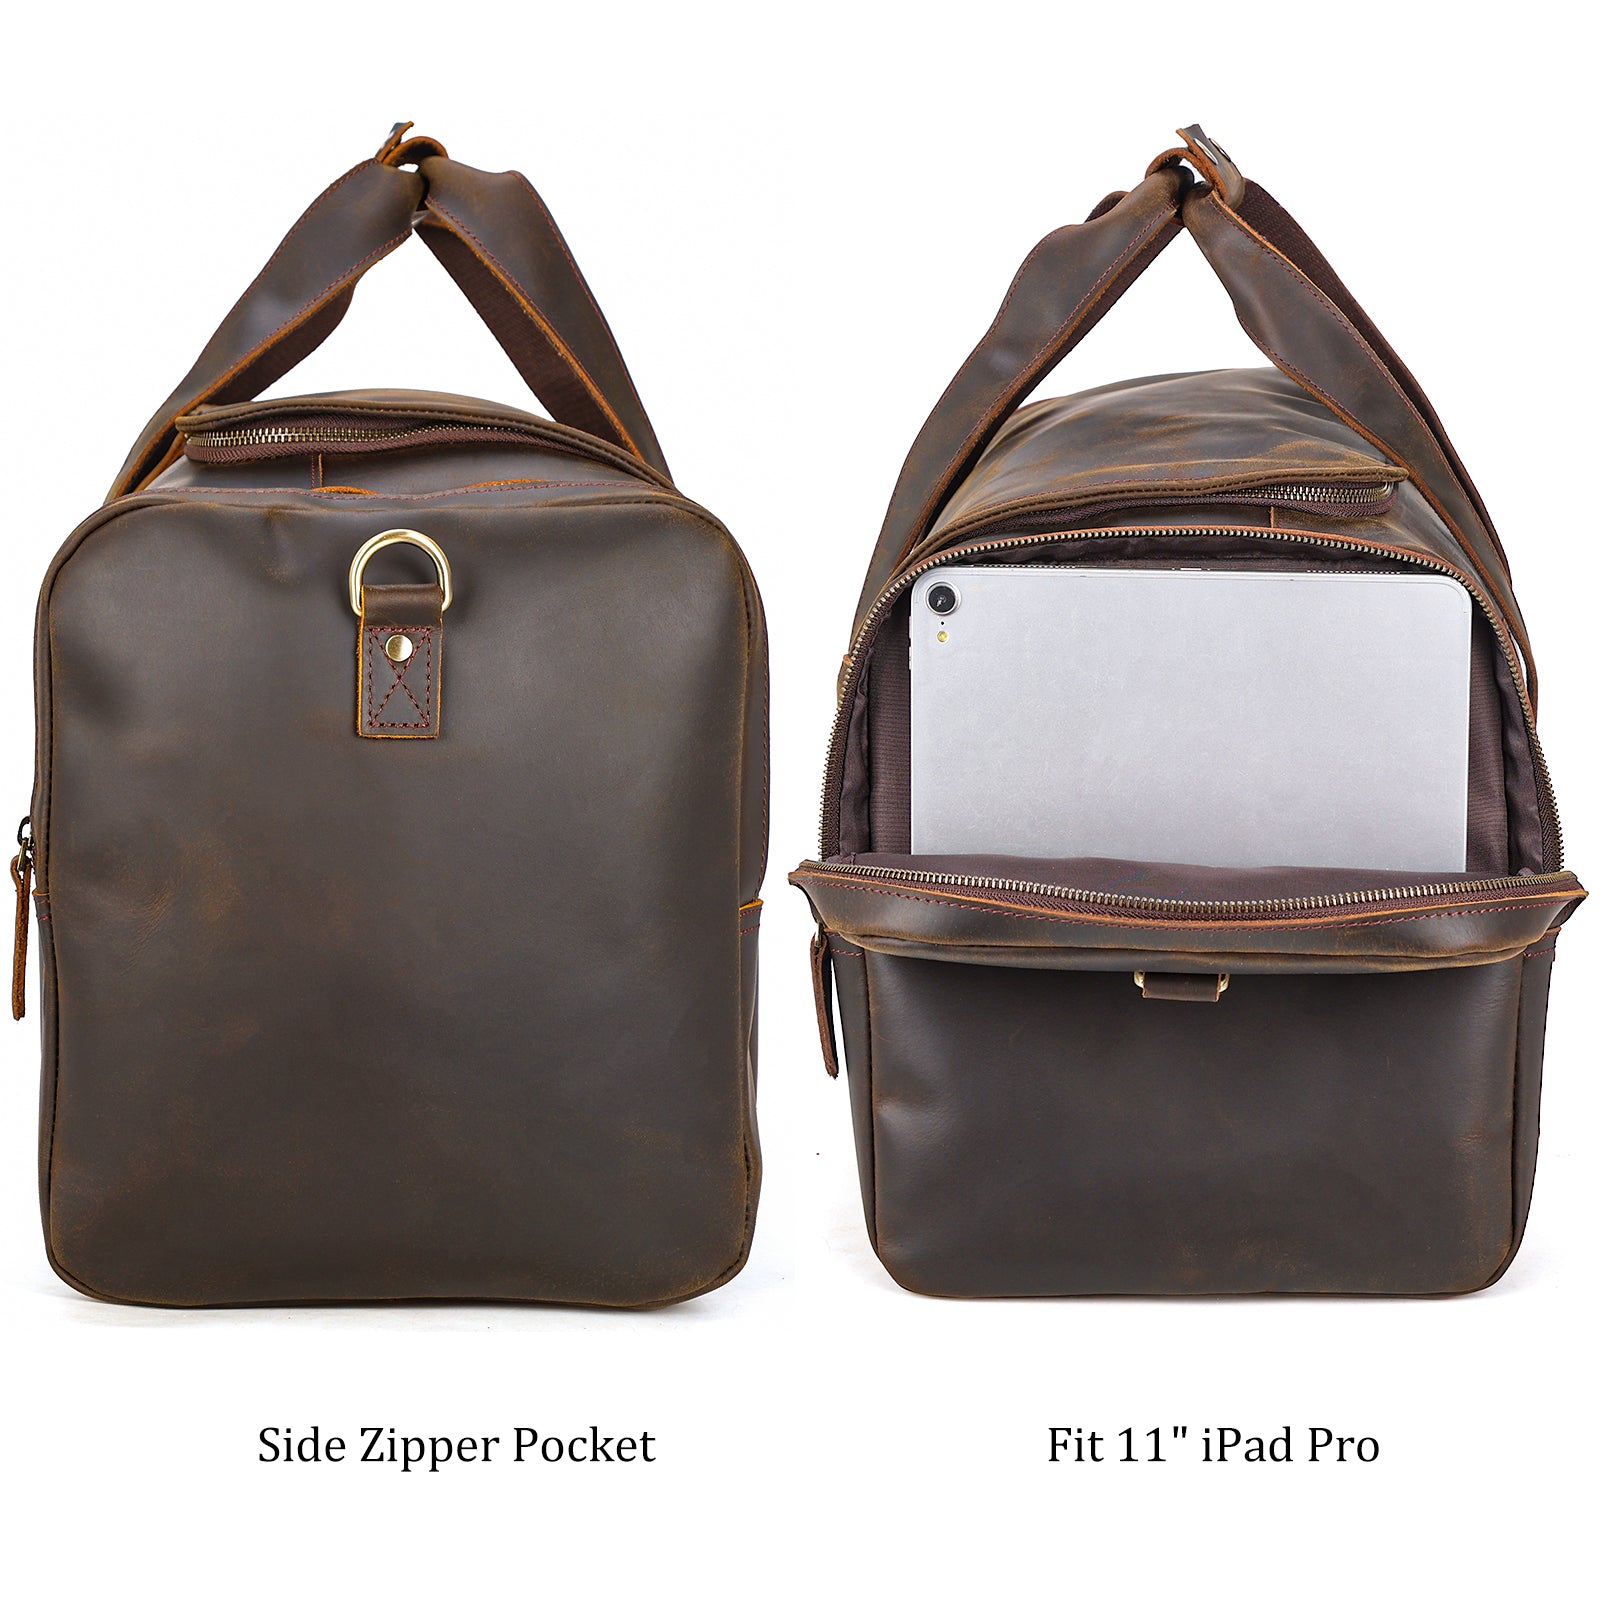 Full Grain Leather Travel Duffle Bag 42L Sport Weekender Bag (Side)